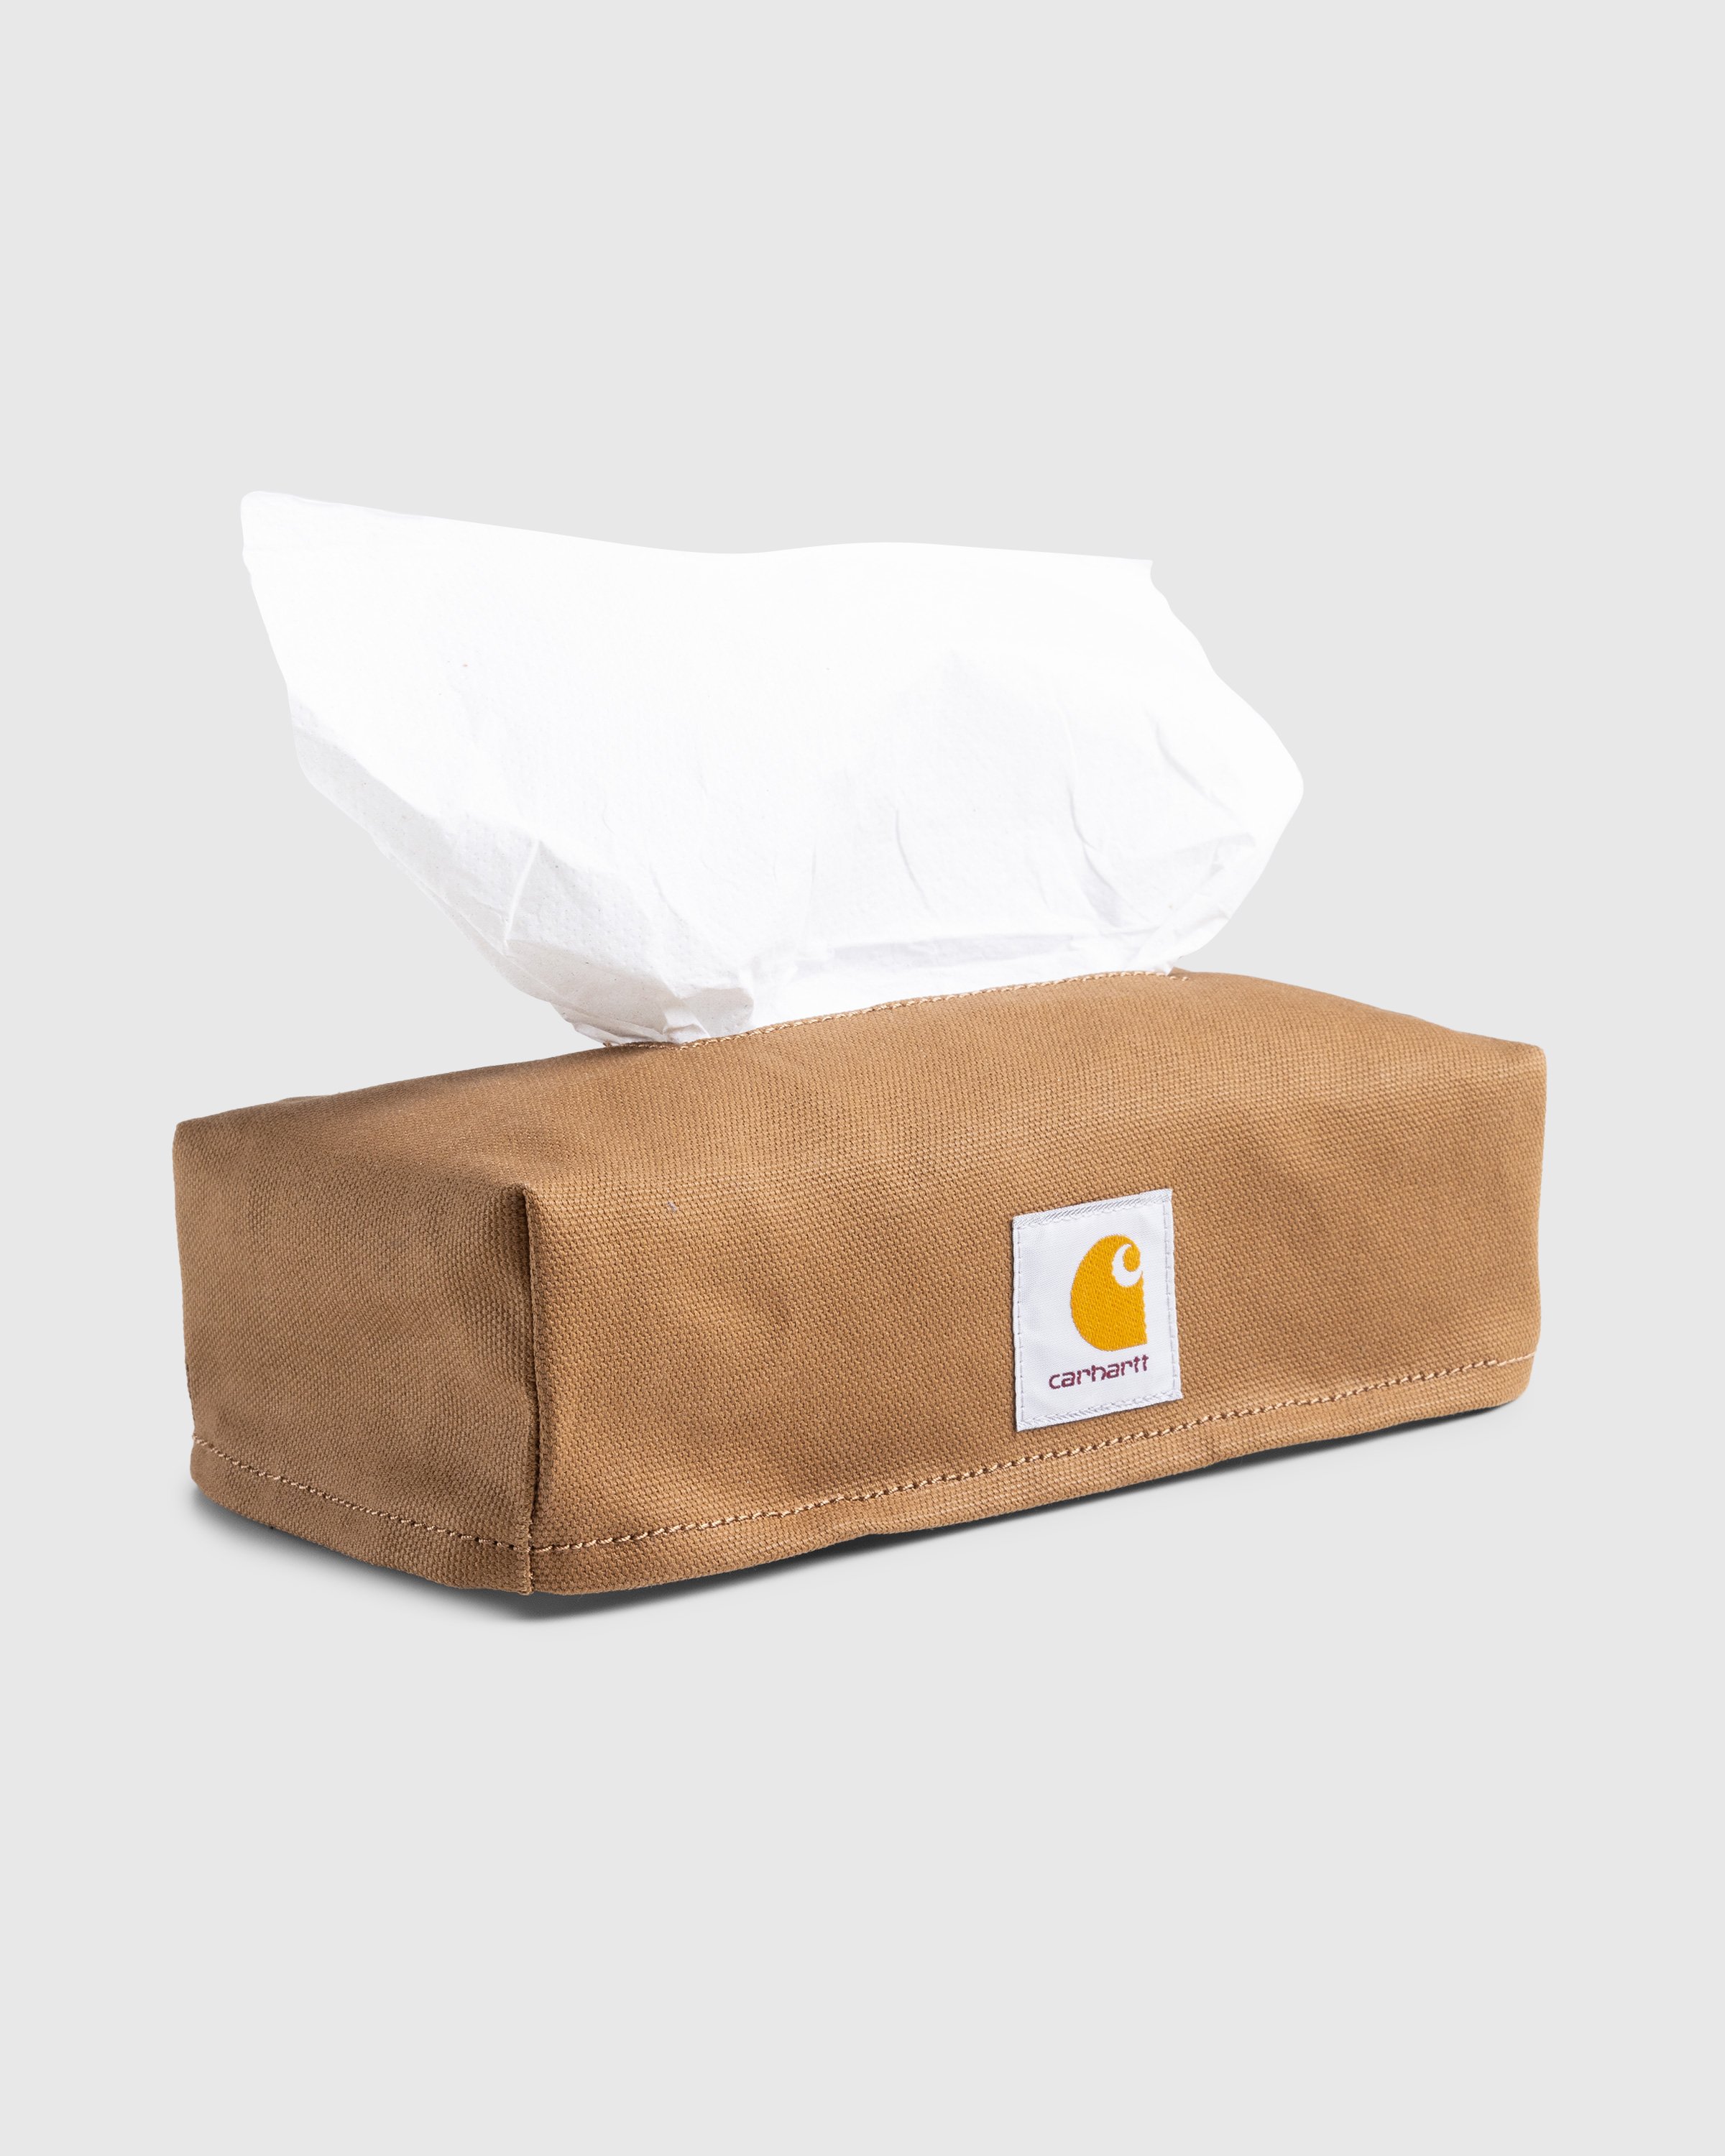 Carhartt WIP - Tissue Box Cover Hamilton Brown - Lifestyle - Brown - Image 2